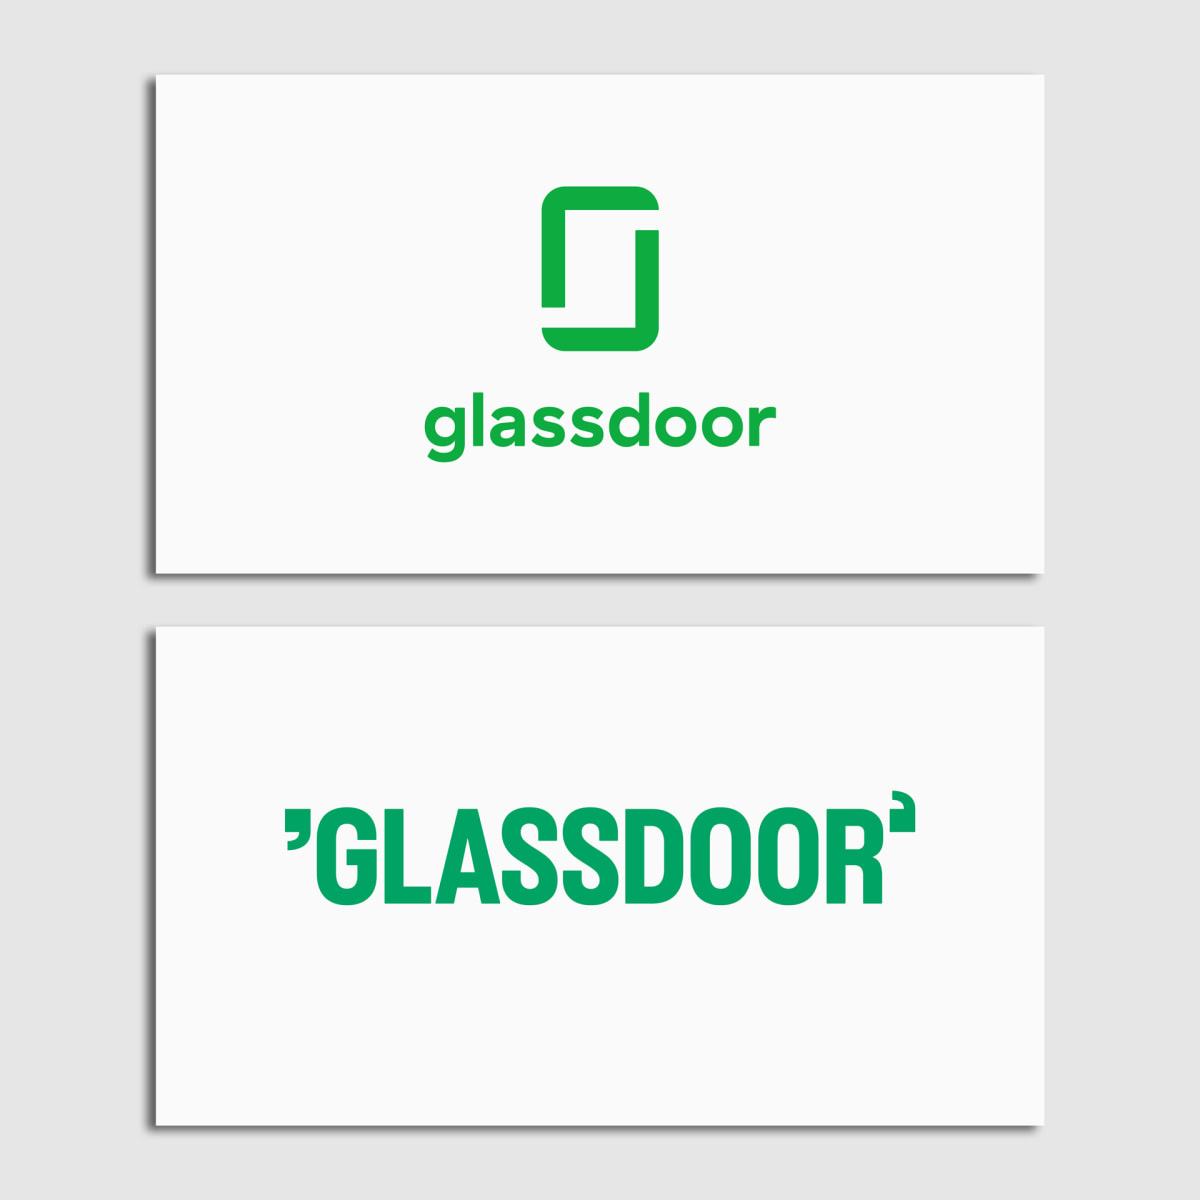 Glassdoor Images :: Photos, videos, logos, illustrations and branding ::  Behance